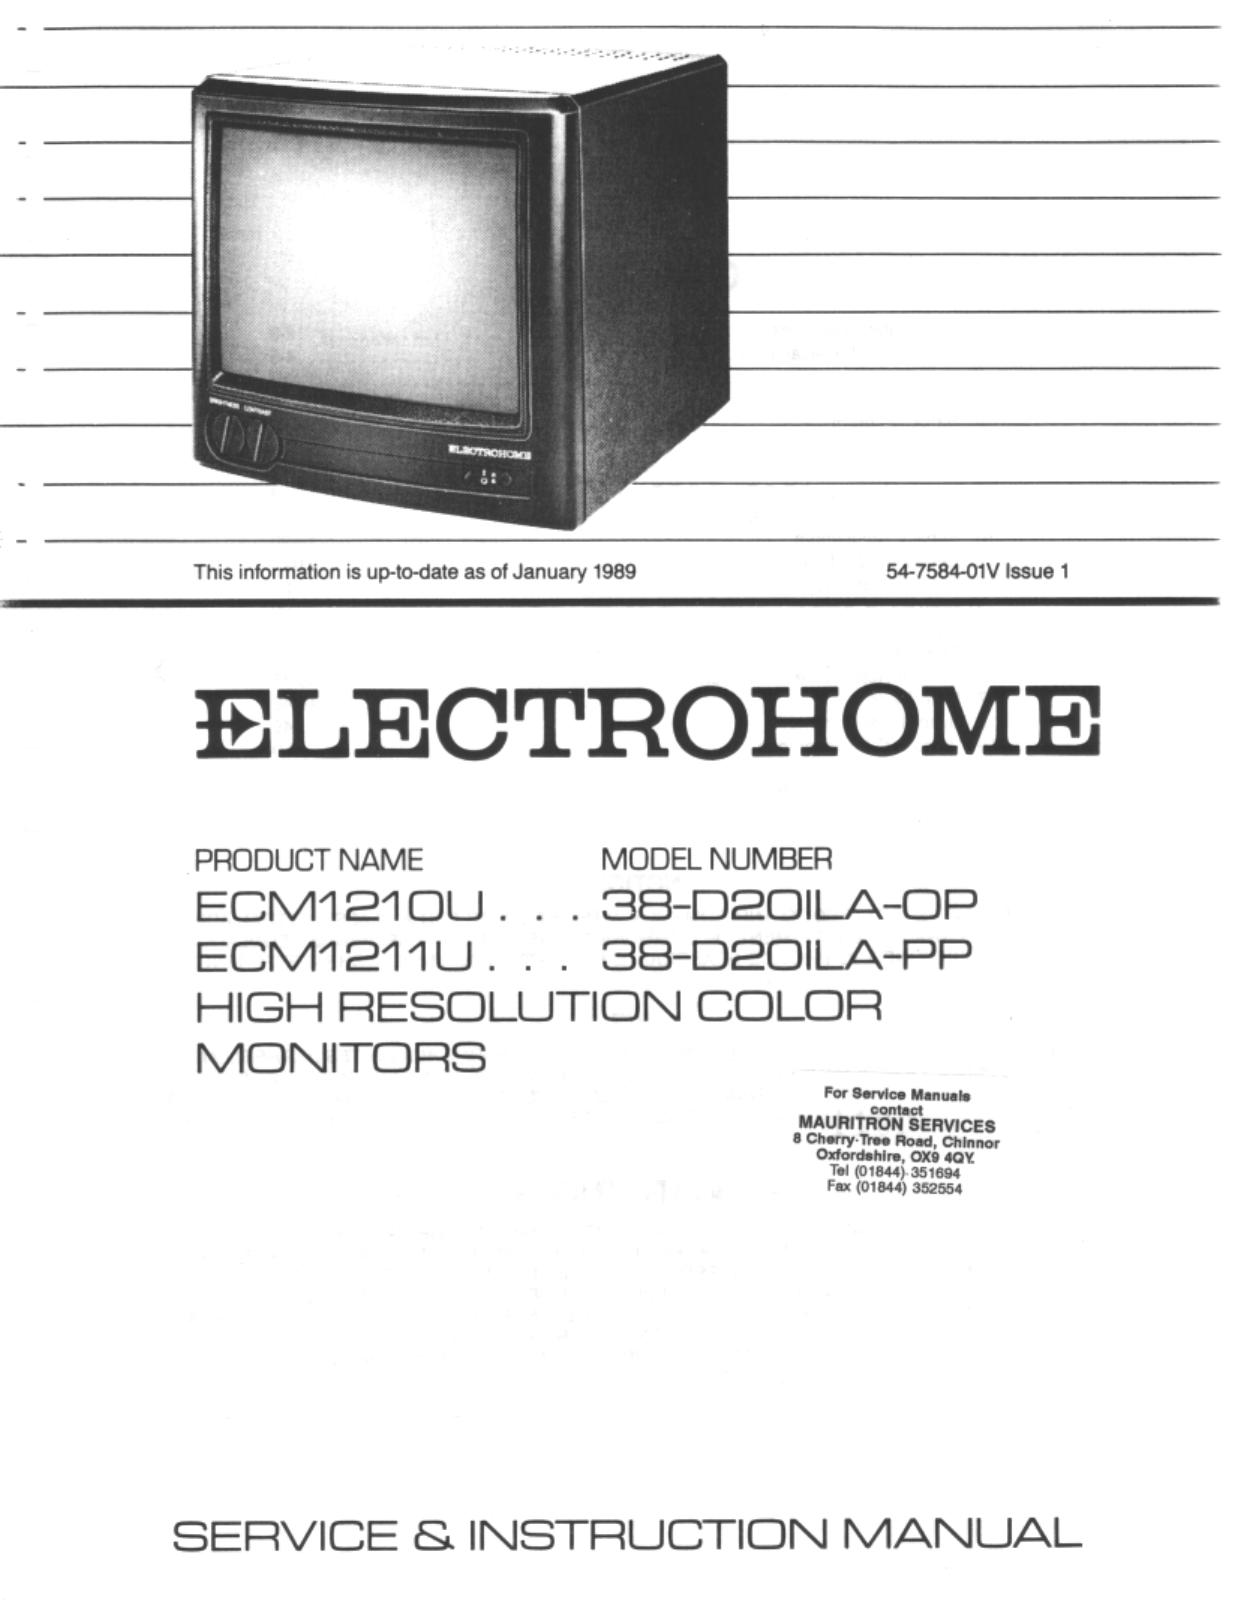 electrohome ecm1210 series monitors